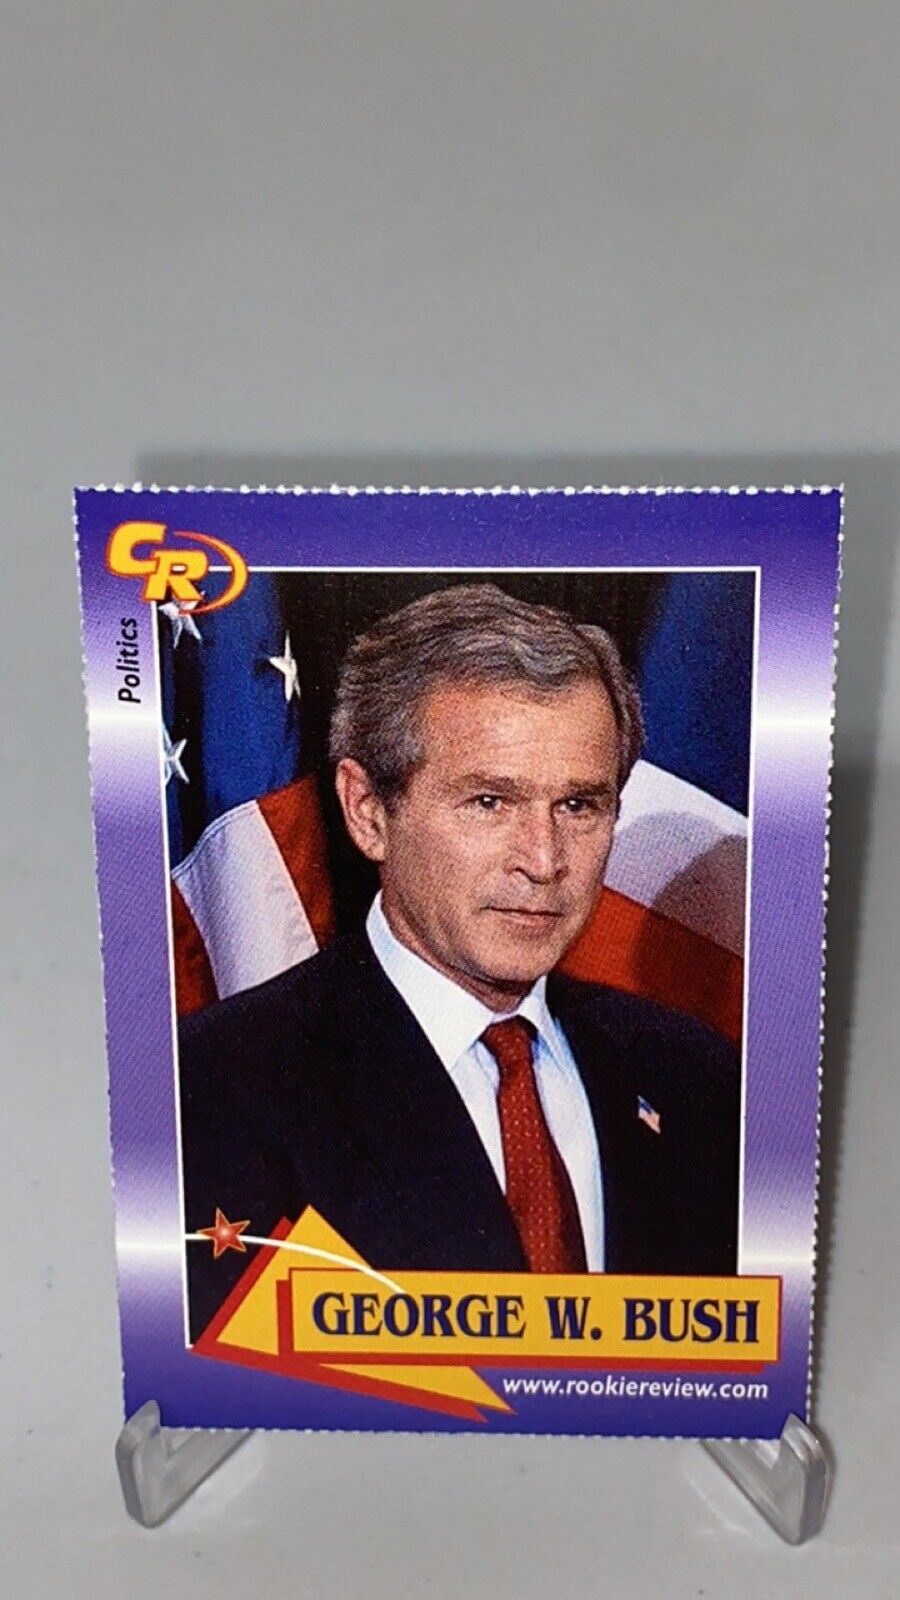 2003 Celebrity Review George W. Bush Rookie Review Politics Card #1